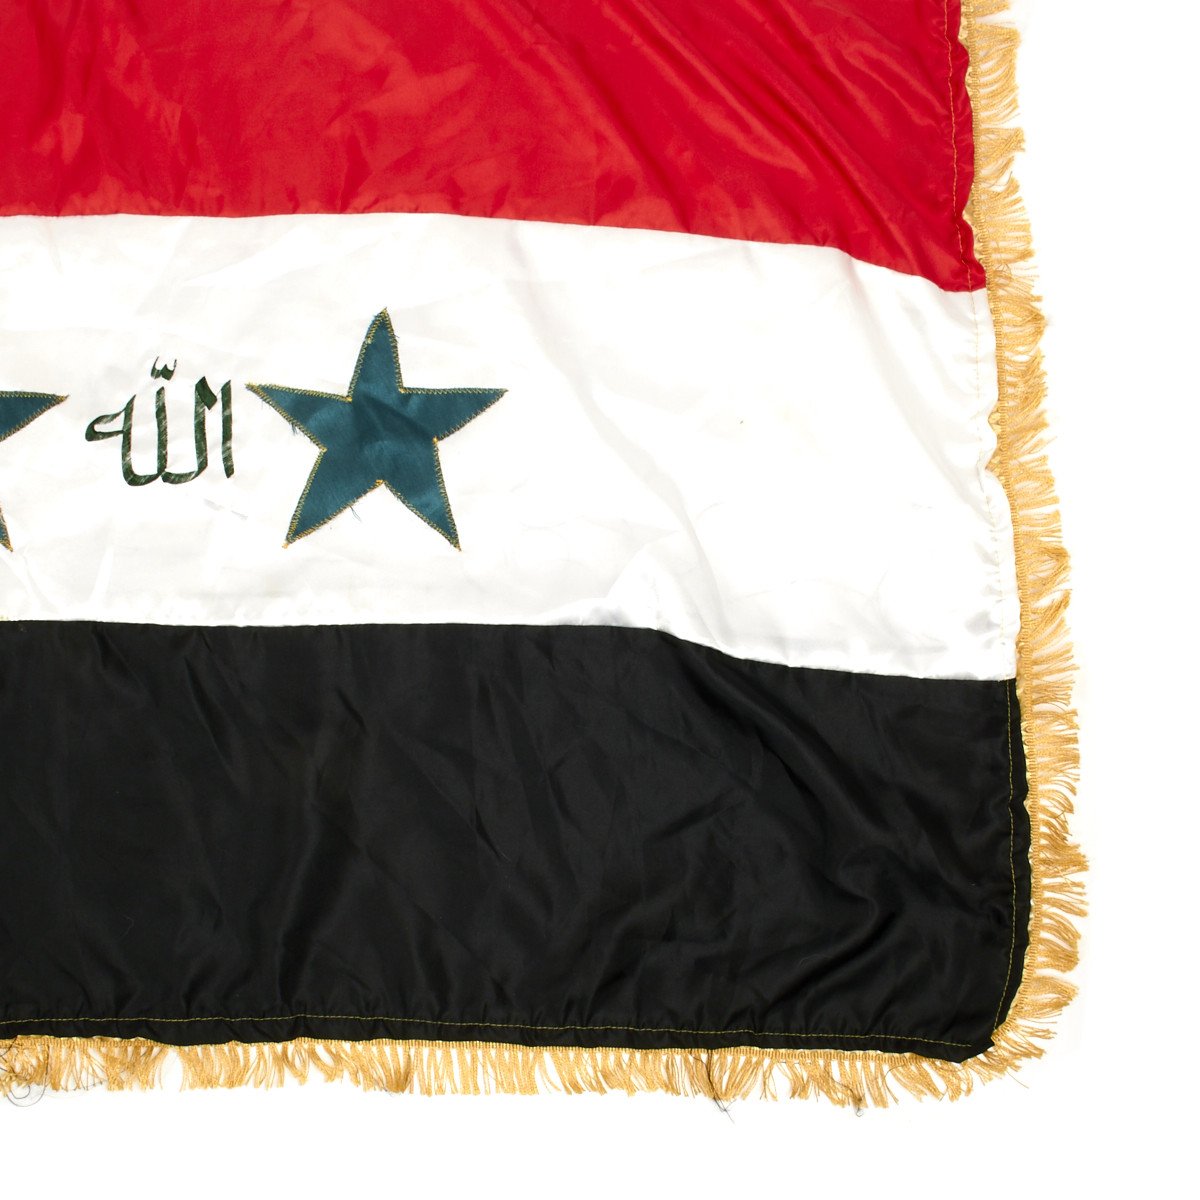 Iraq gets new flag, drops 'God is Great